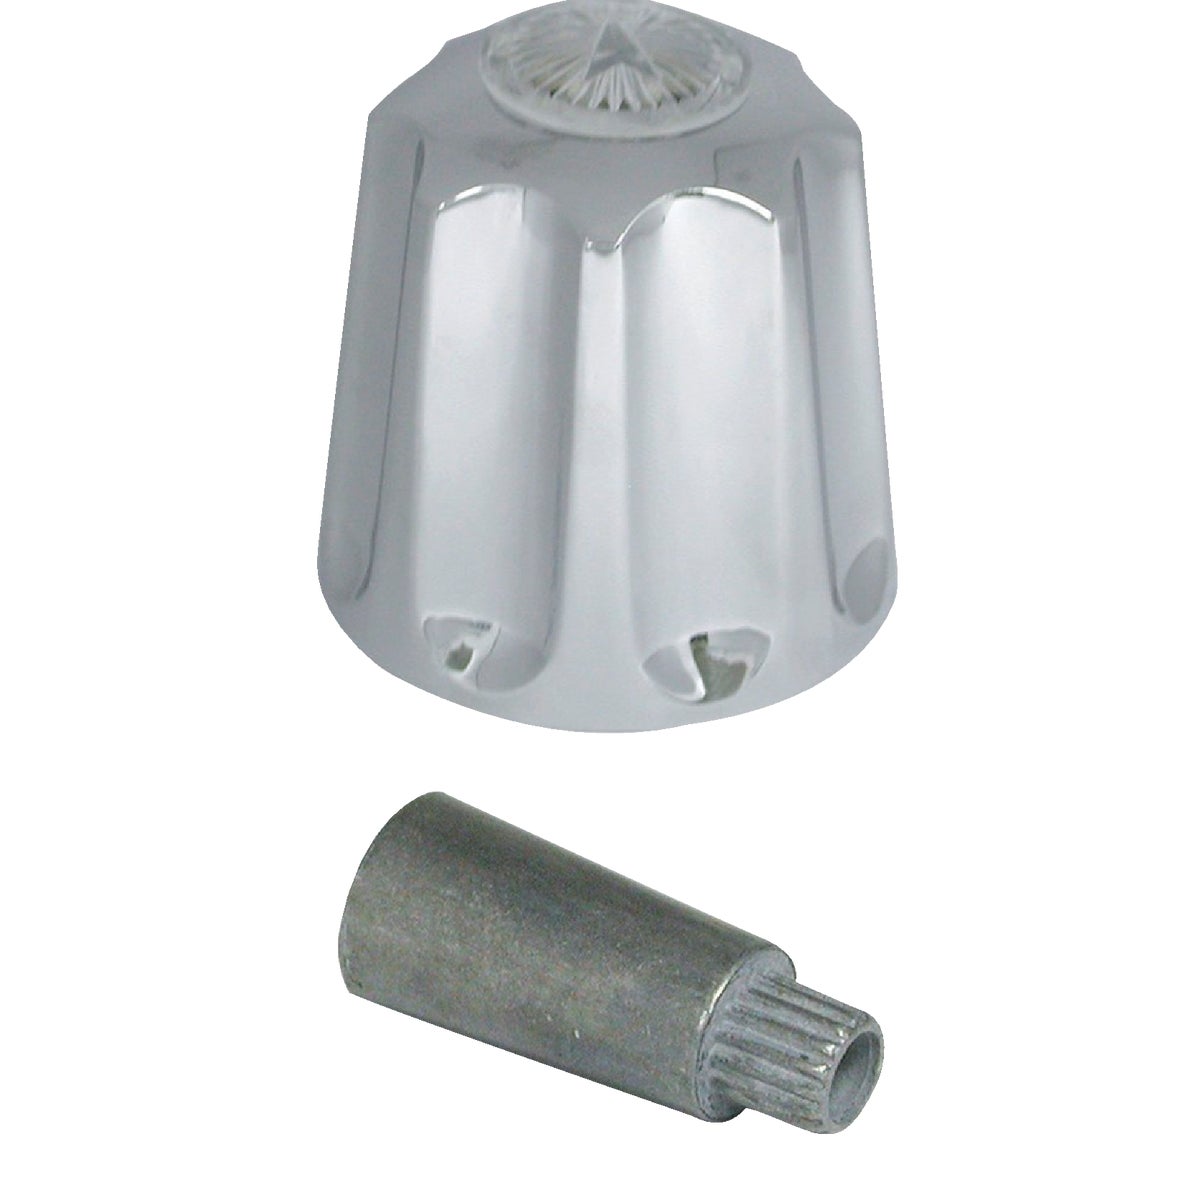 Item 447277, Gerber tub and shower diverter handle includes stem extension to 